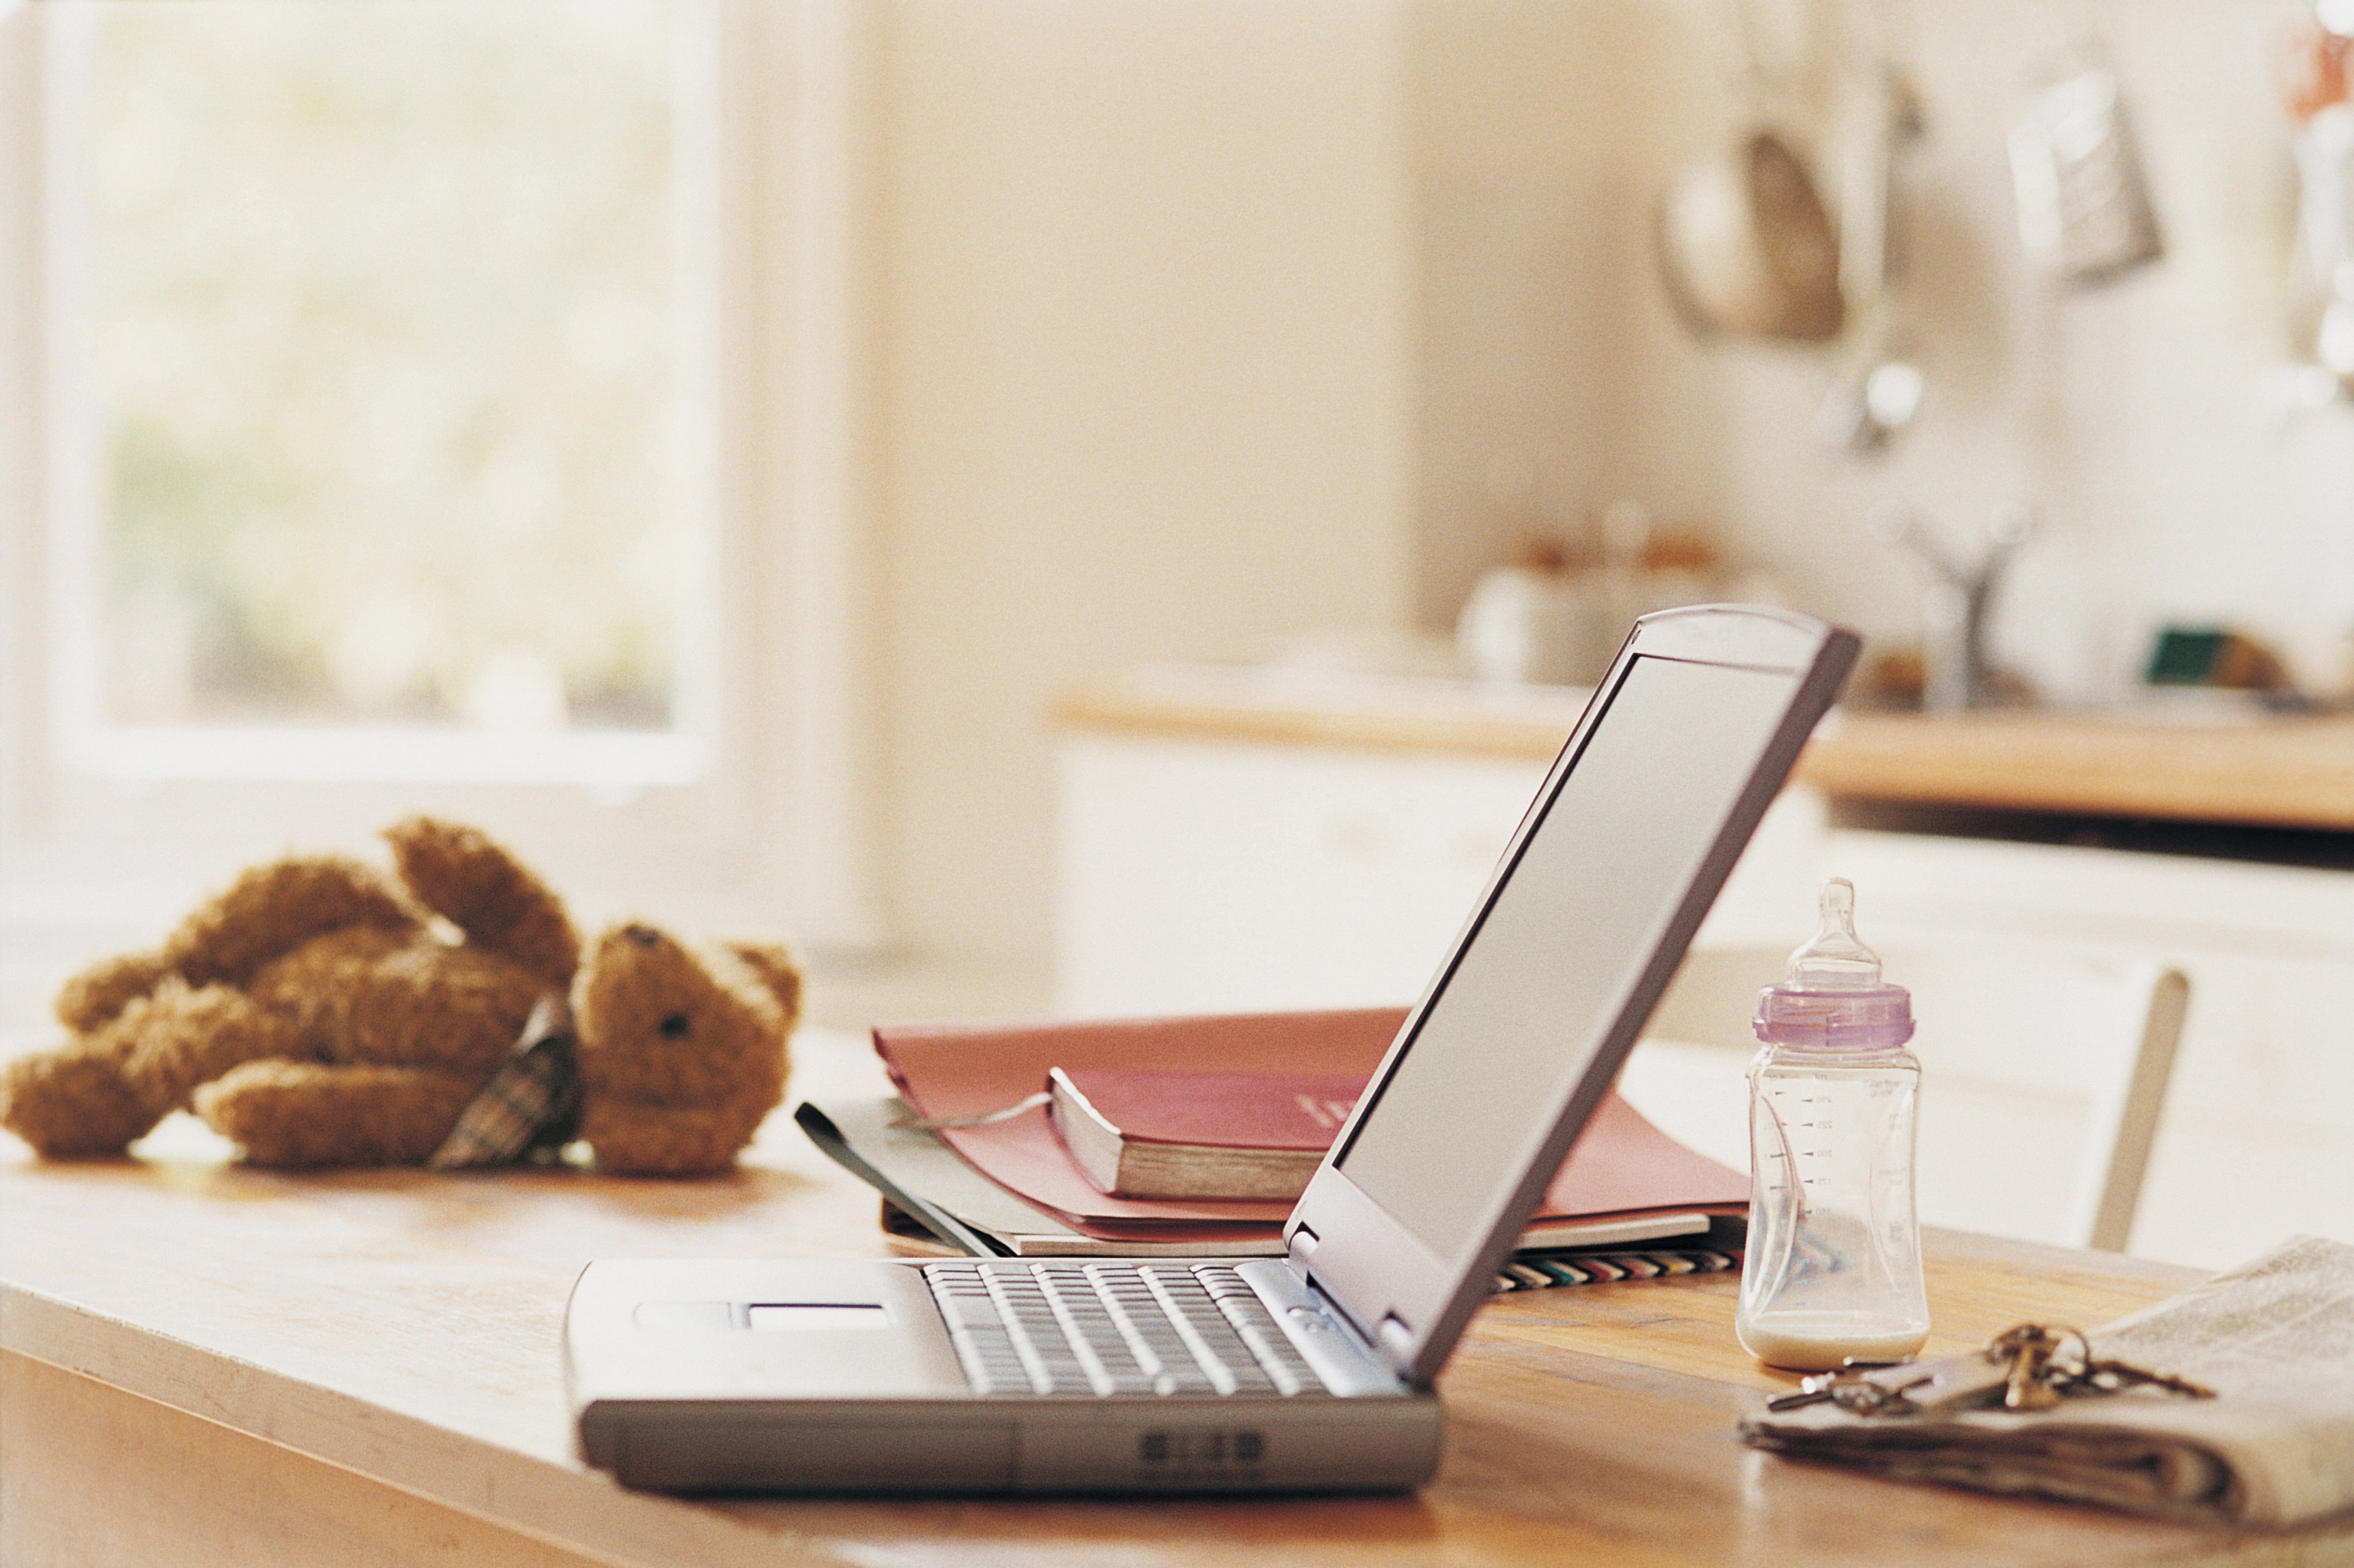 Laptop, Teddy Bear, Baby Bottle, Newspaper, Keys, a Book and a Folder on a Kitchen Counter